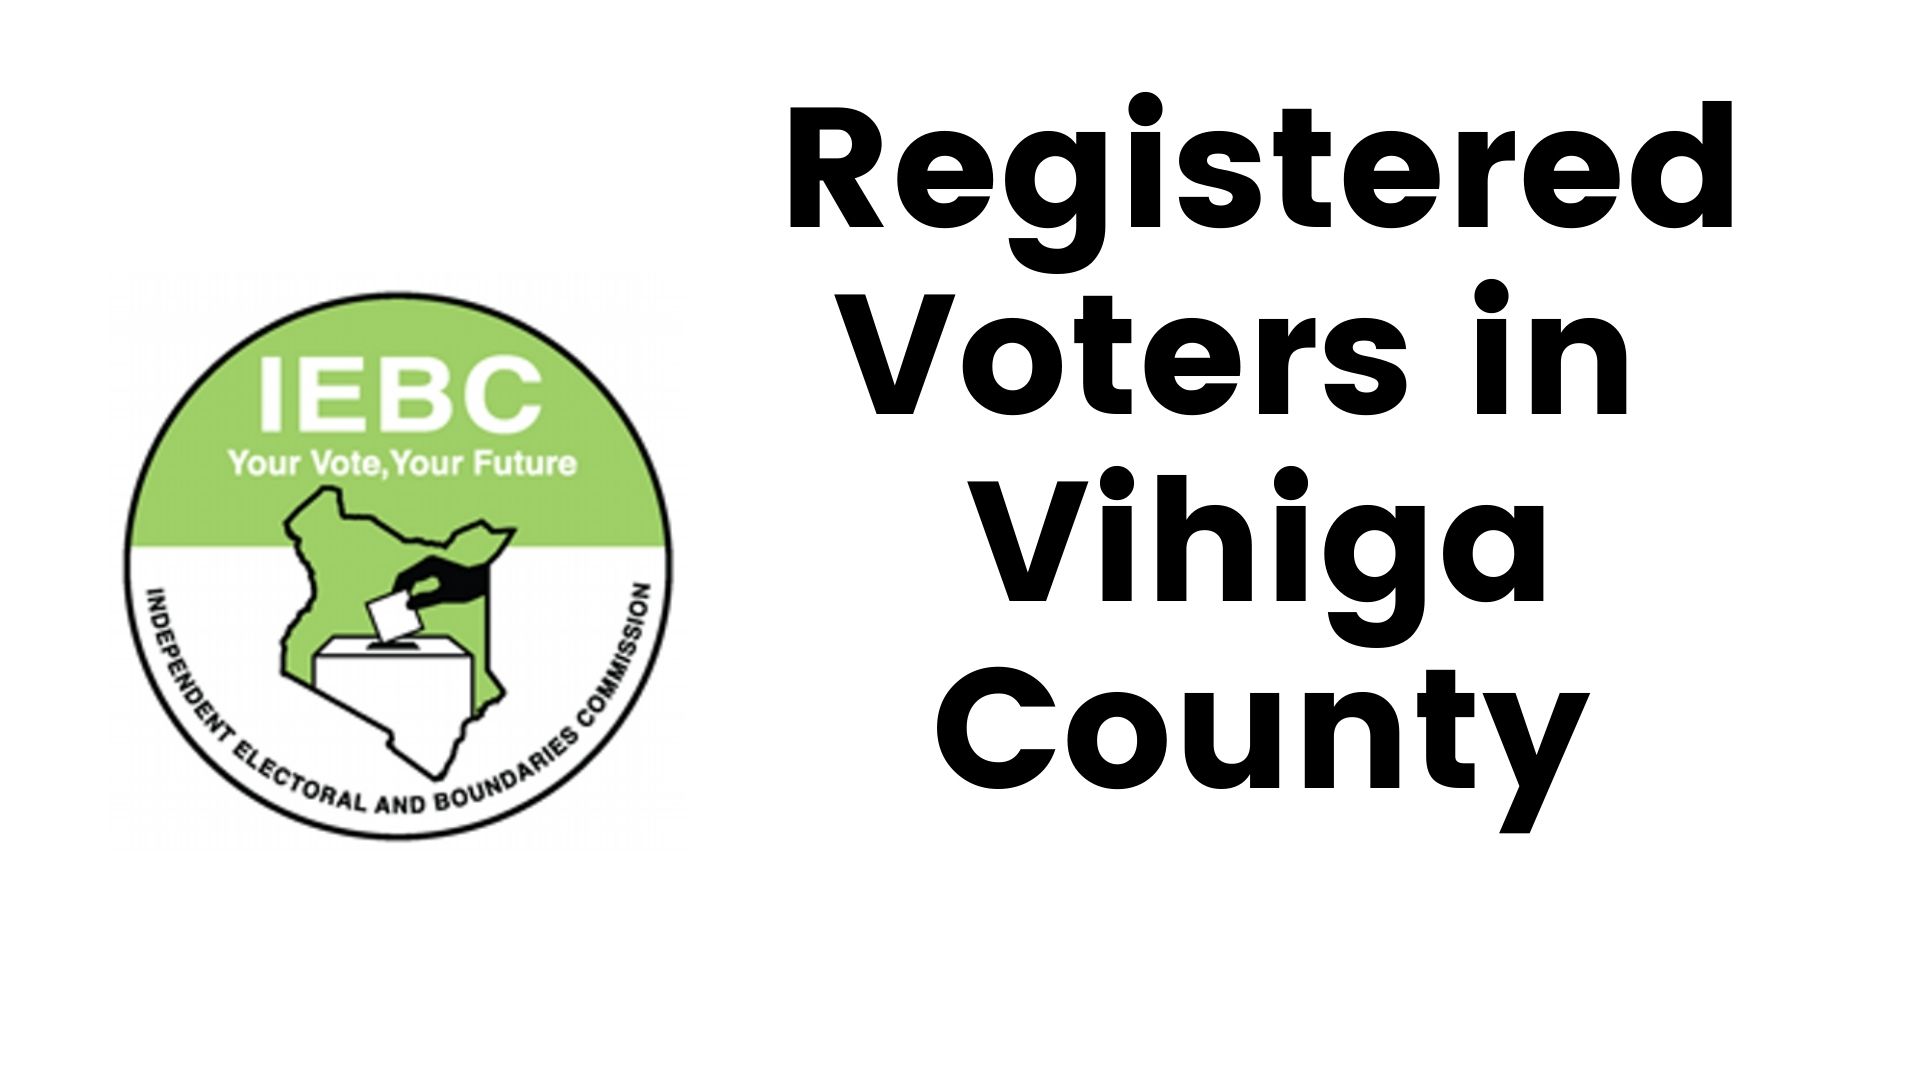 IEBC Vihiga County Registered Voters